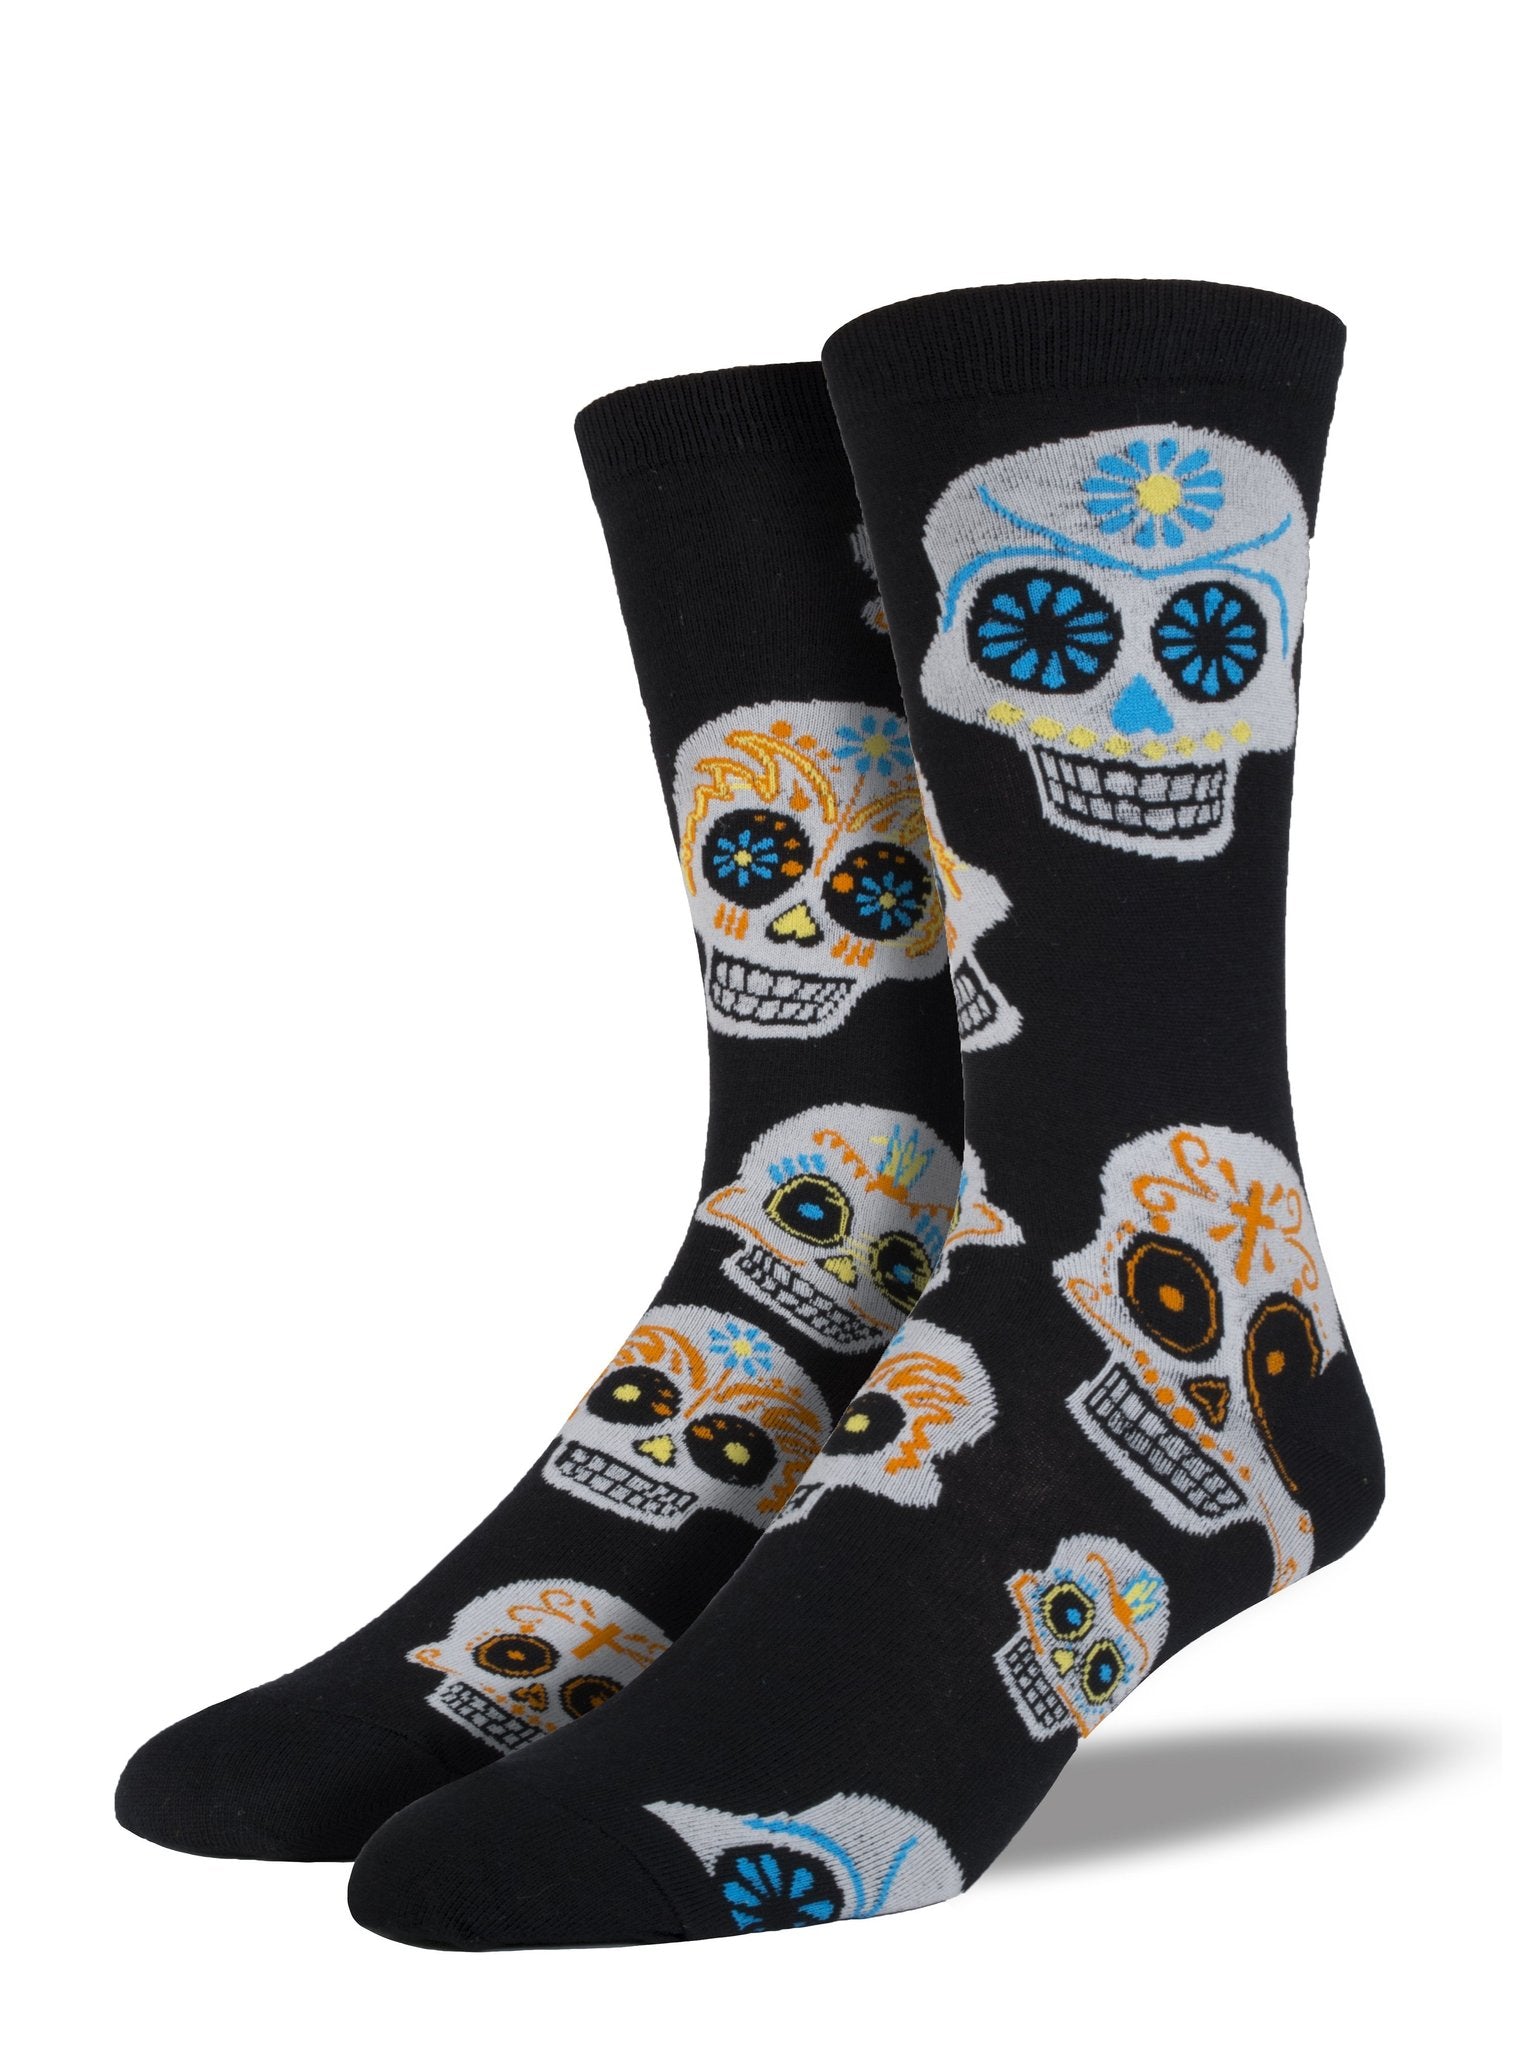 King Size Big Muertos Skull Men's Socks